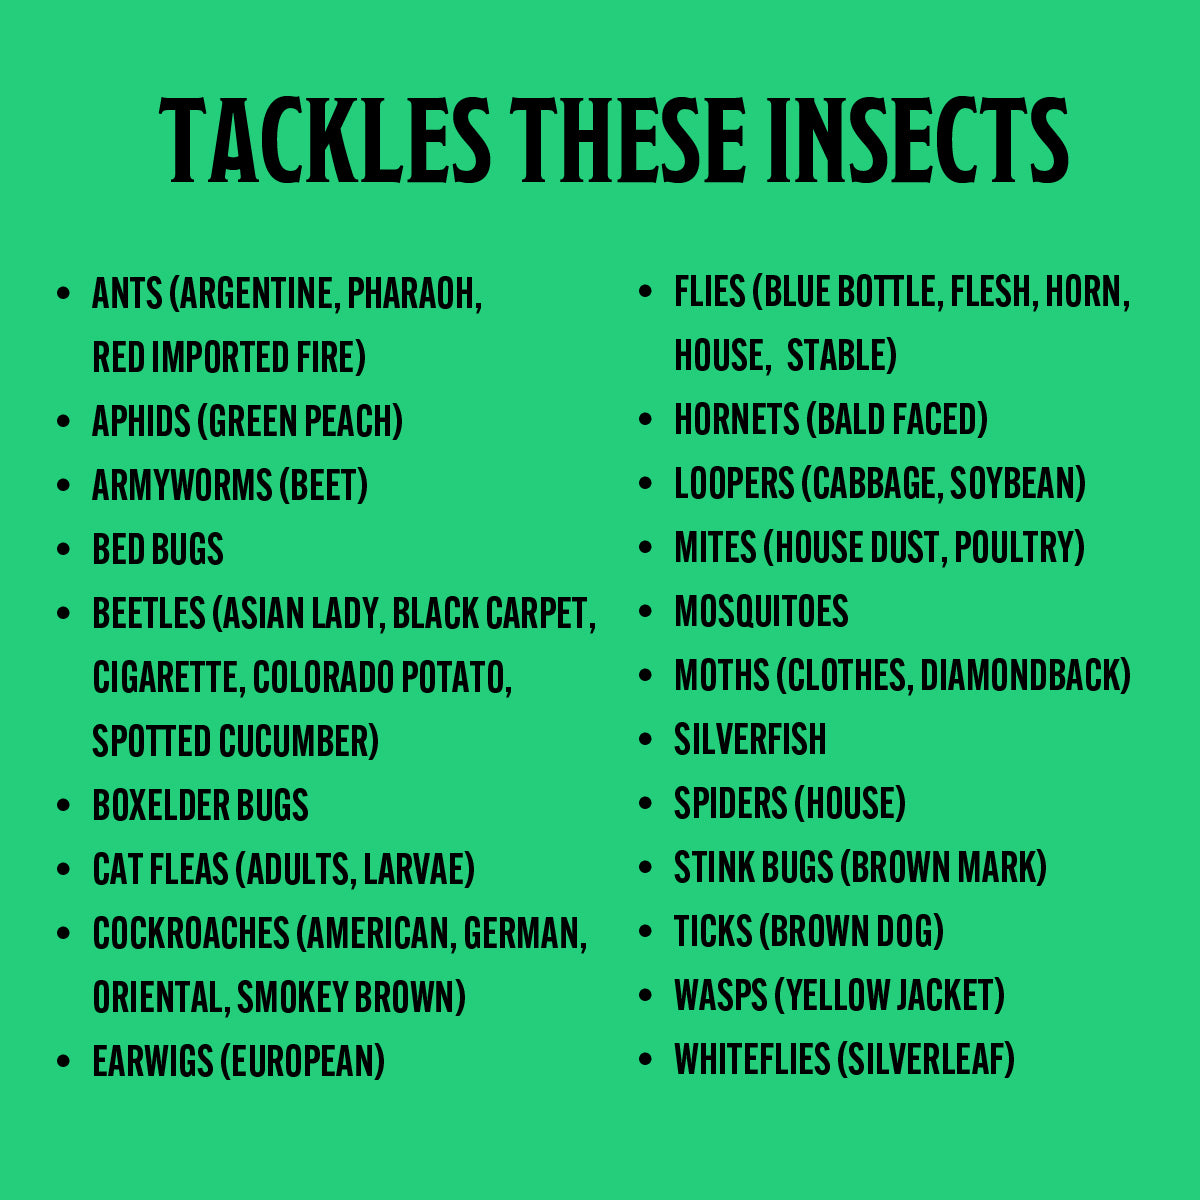 Advanced Pest Killer Concentrate (2 Pack)